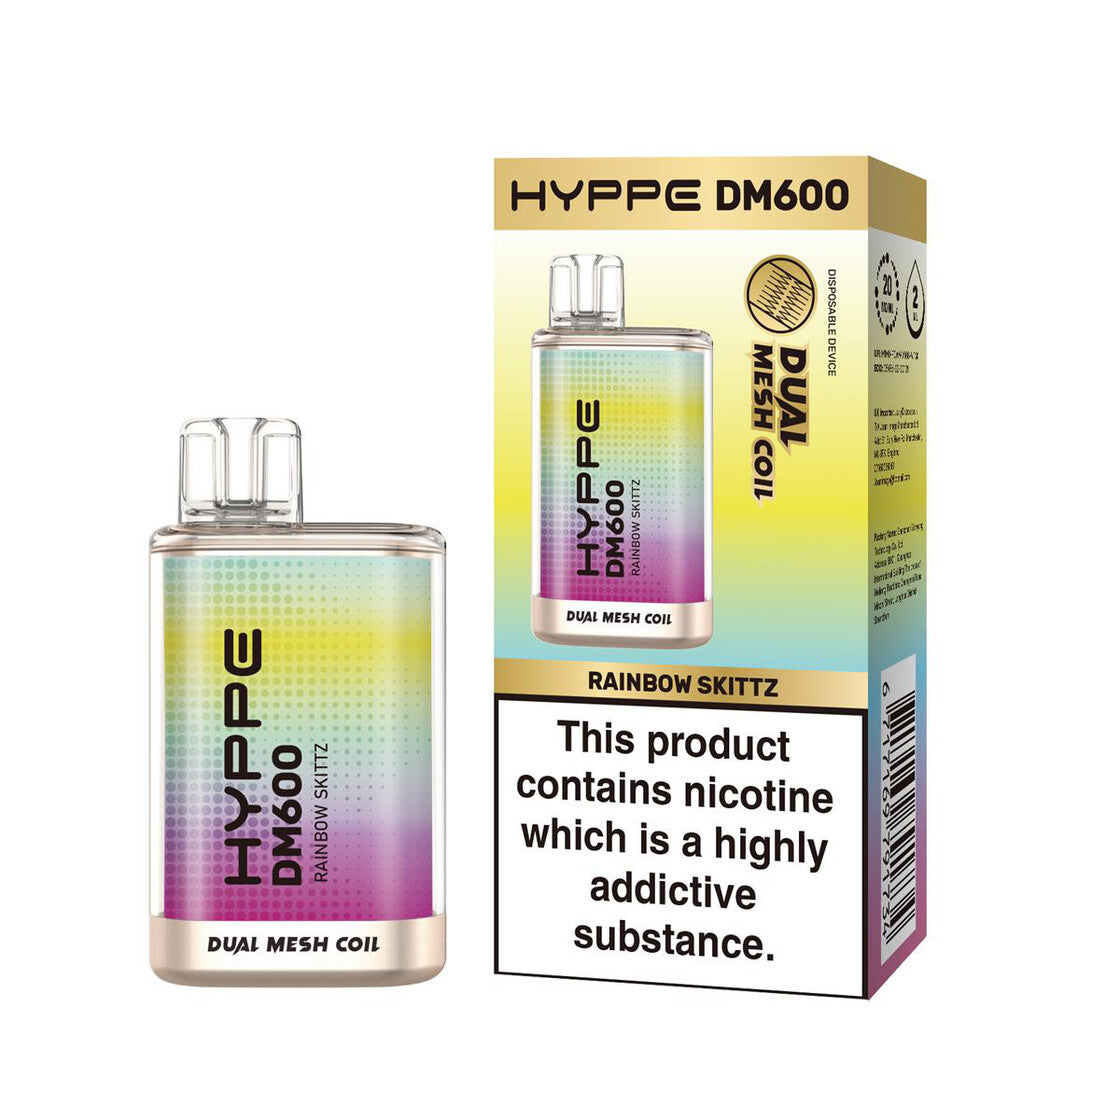 Flerbar Hyppe DM600 - Rainbow Skittz